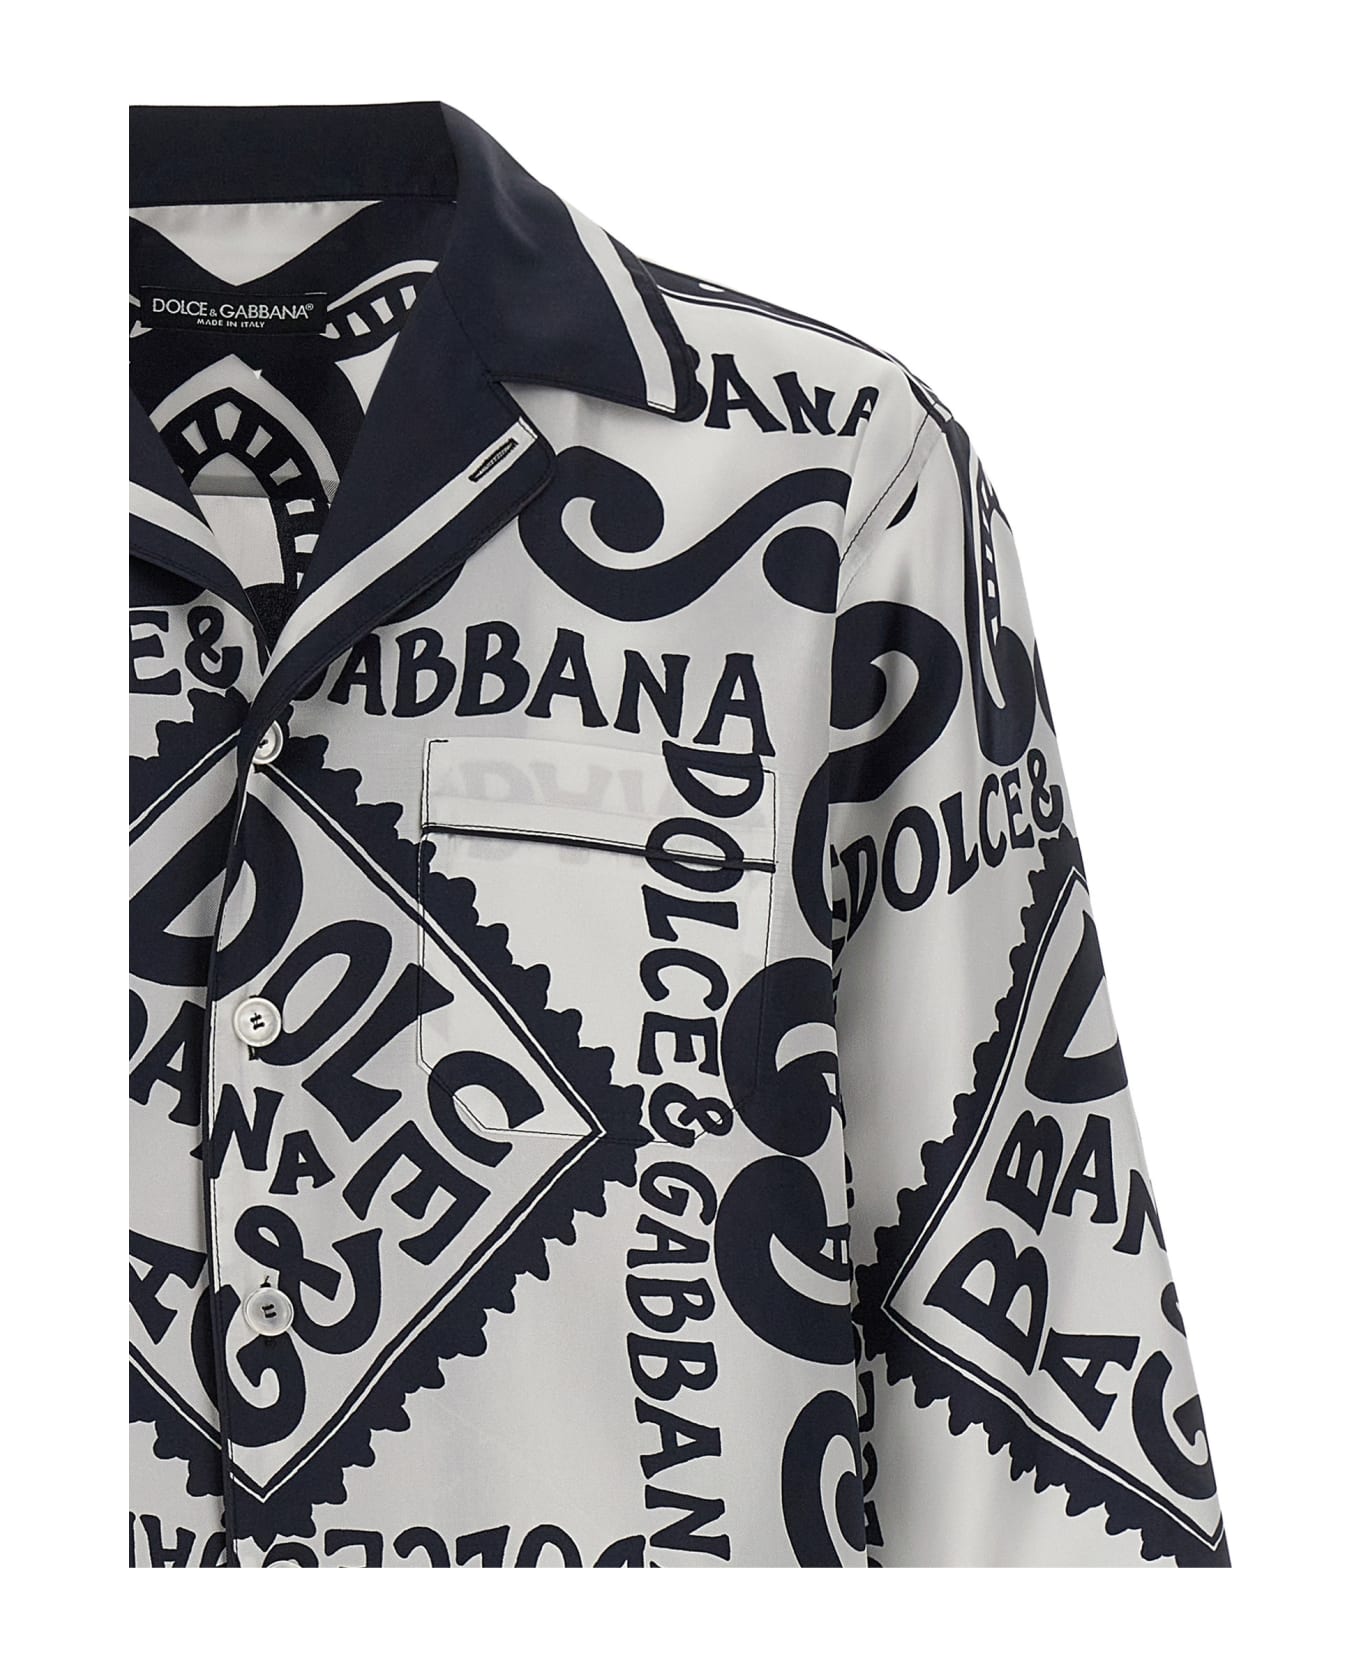 Dolce & Gabbana 'marina' Shirt - White/Black